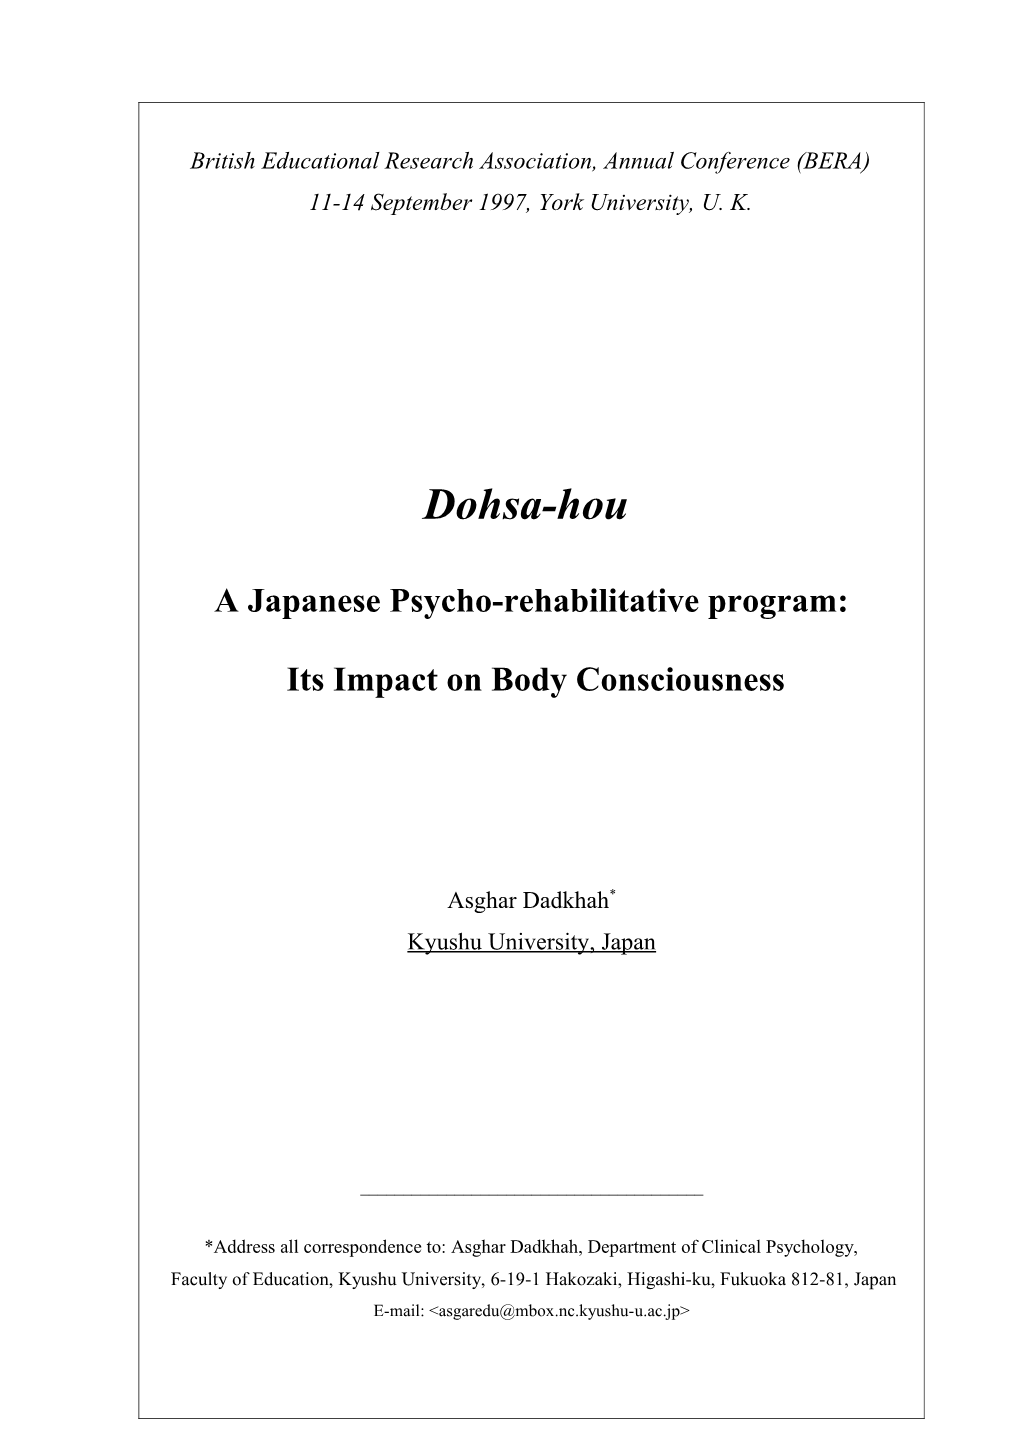 Dohsa-Hou - a Japanese Psychorehabilitative Program: It's Impact on Body Consciousness